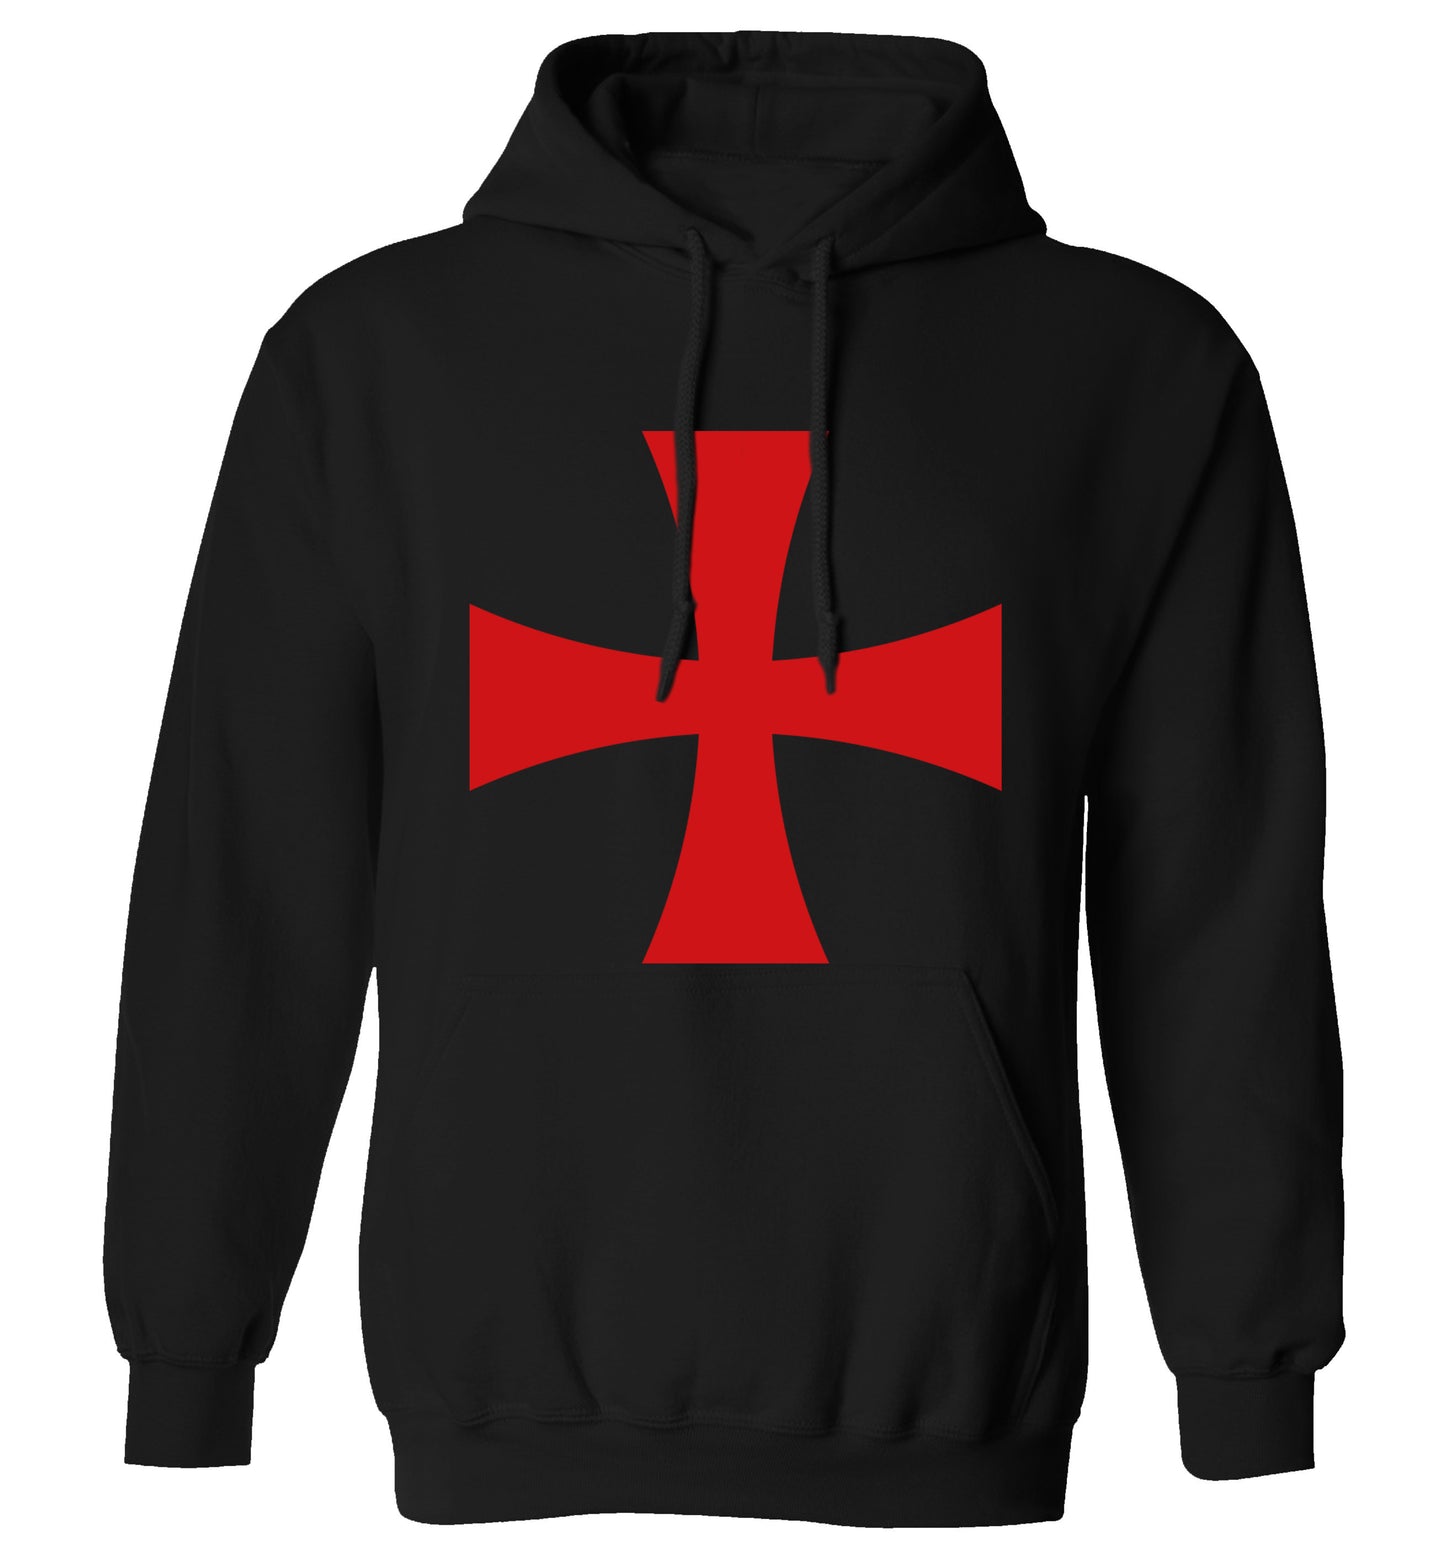 Knights Templar cross adults unisex black hoodie 2XL